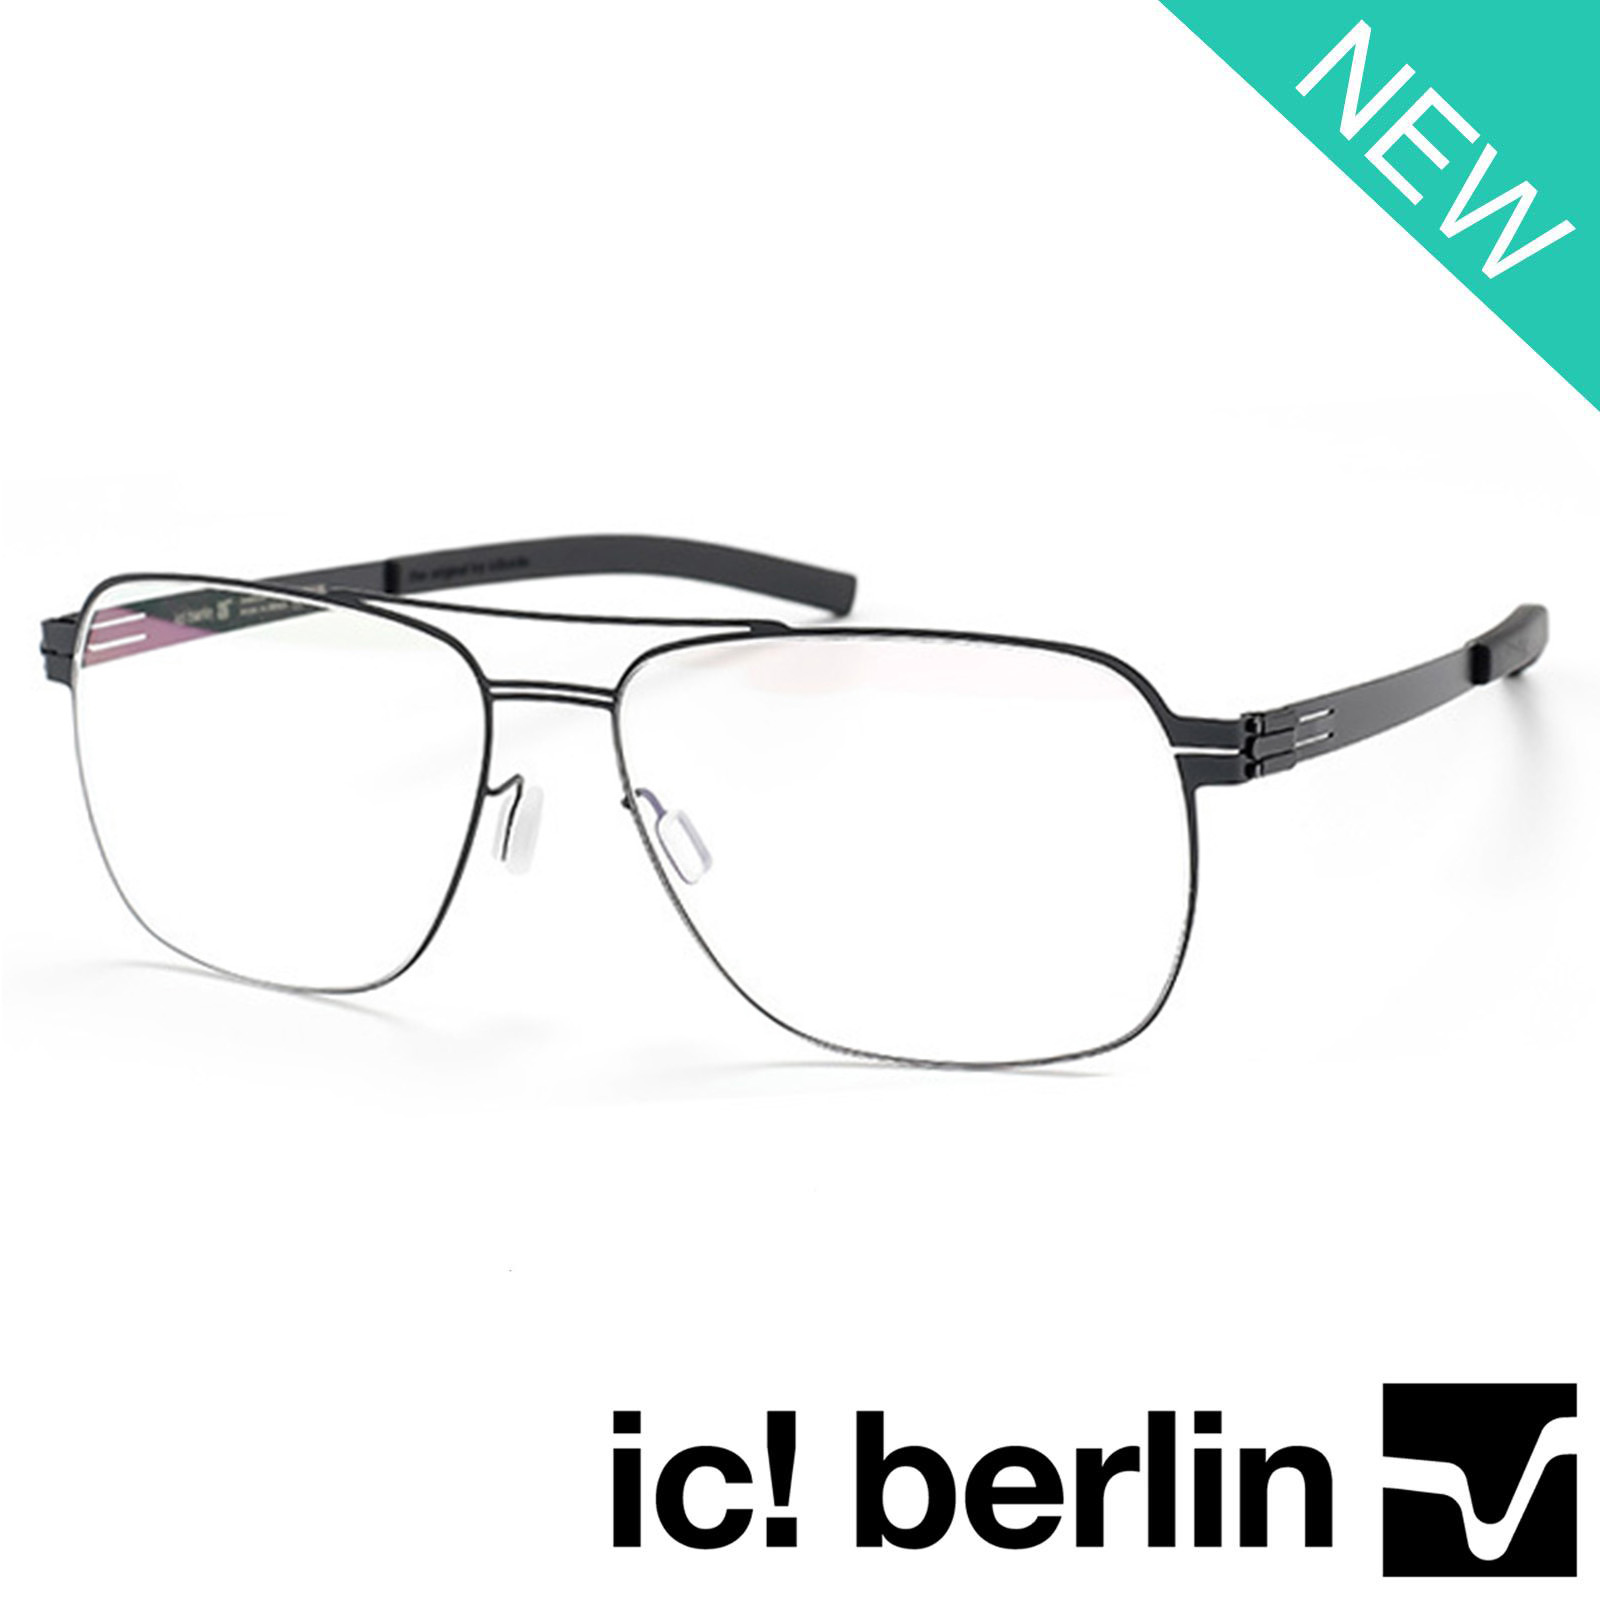 Ic Berlin แว่นตา รุ่น 032 C-1 สีดำ กรอบเต็ม Square shape ทรงเหลี่ยม ขาข้อต่อ วัสดุ สแตนเลส สตีล (สำหรับตัดเลนส์) กรอบแว่นตา สวมใส่สบาย น้ำหนักเบา ไม่ตกเทรนด์ Full frame Eyeglass leg joints Stainless Steel material Eyewear Top Glasses